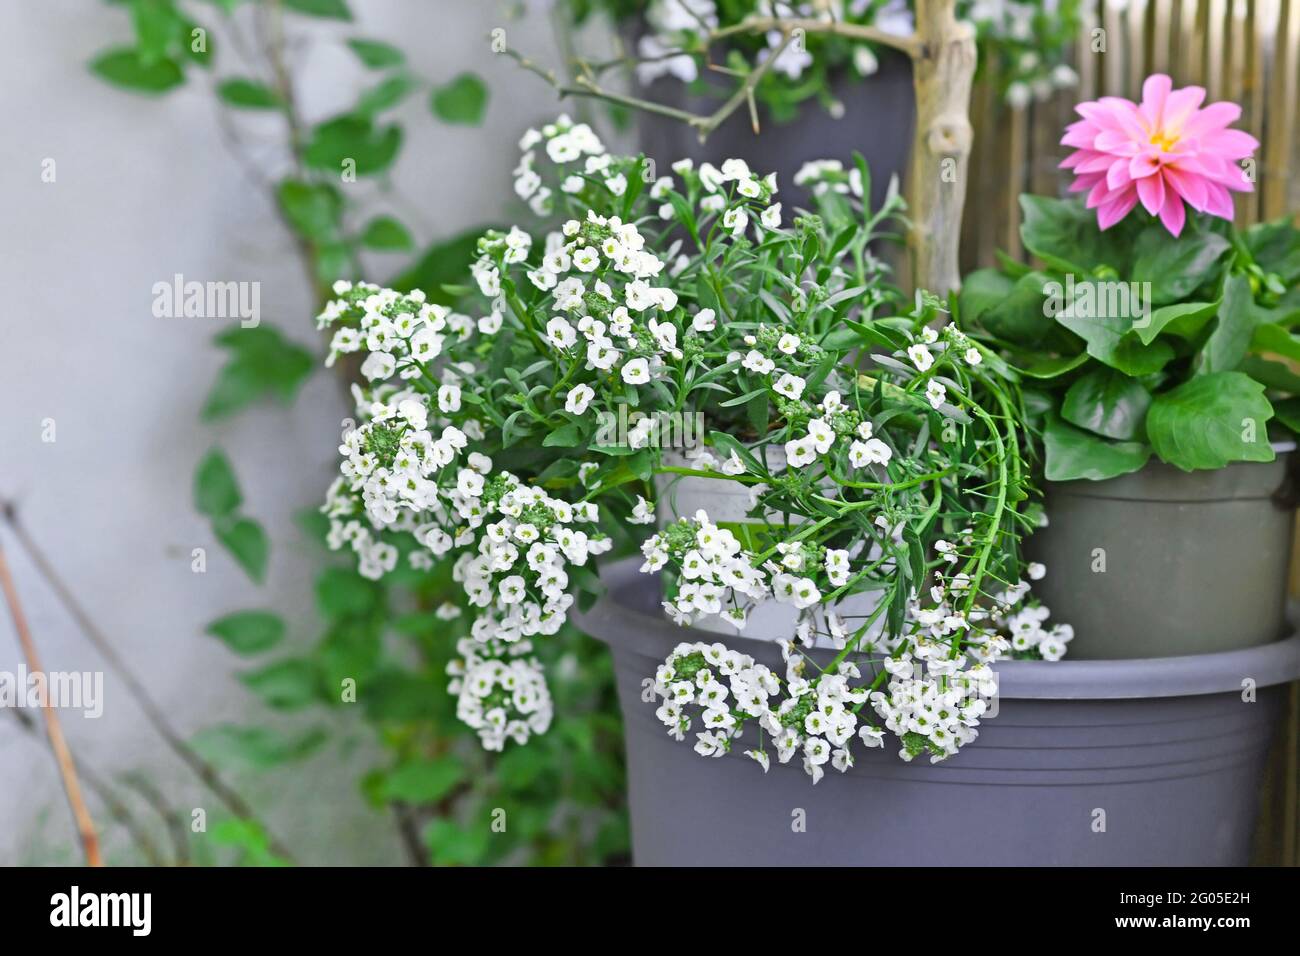 Potted 'Lobularia Snow Princess' plant with small white flowers Stock Photo